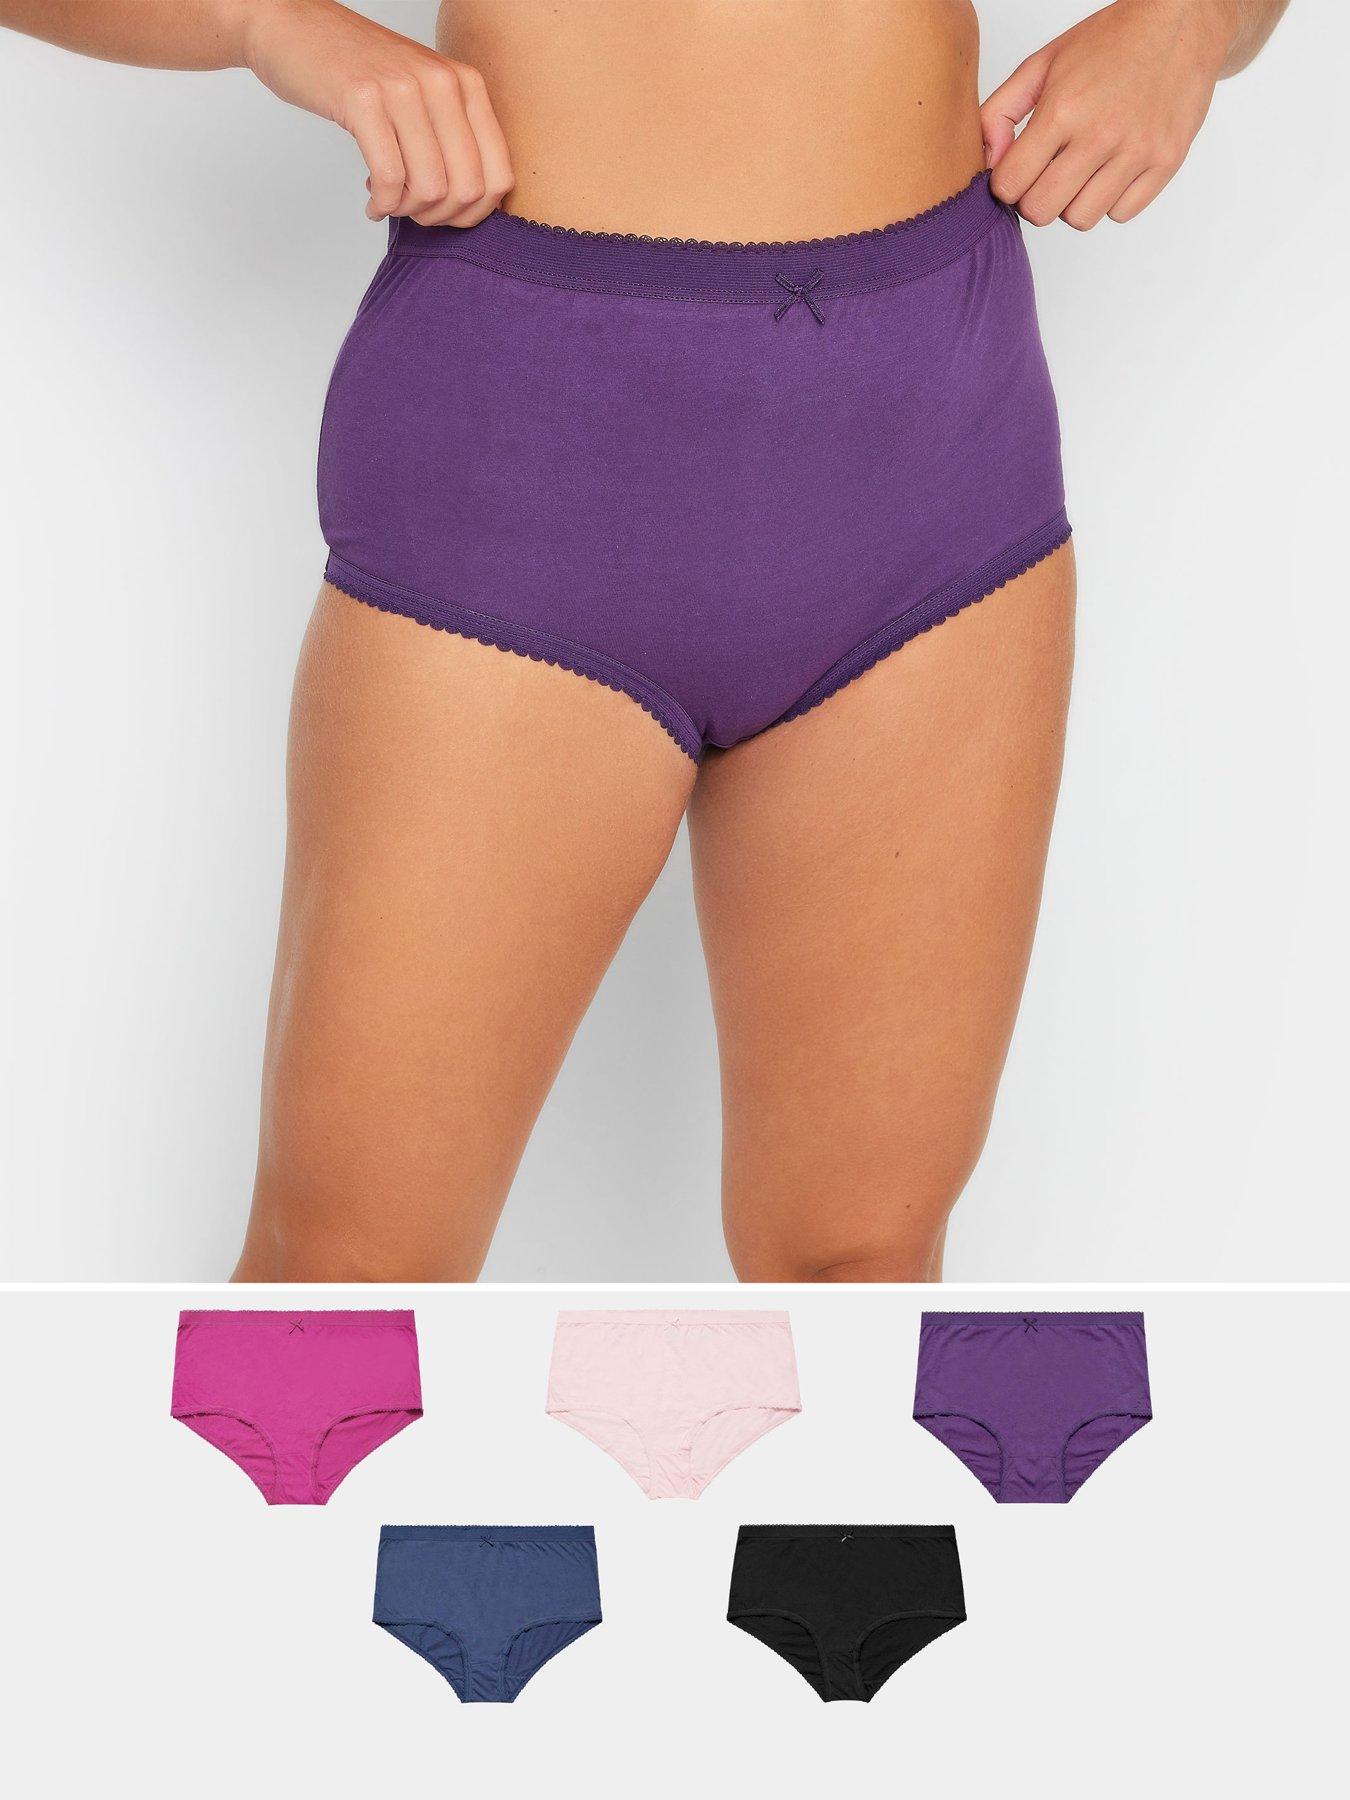 Hanes Women's Nylon Brief Panties, 6-Pack